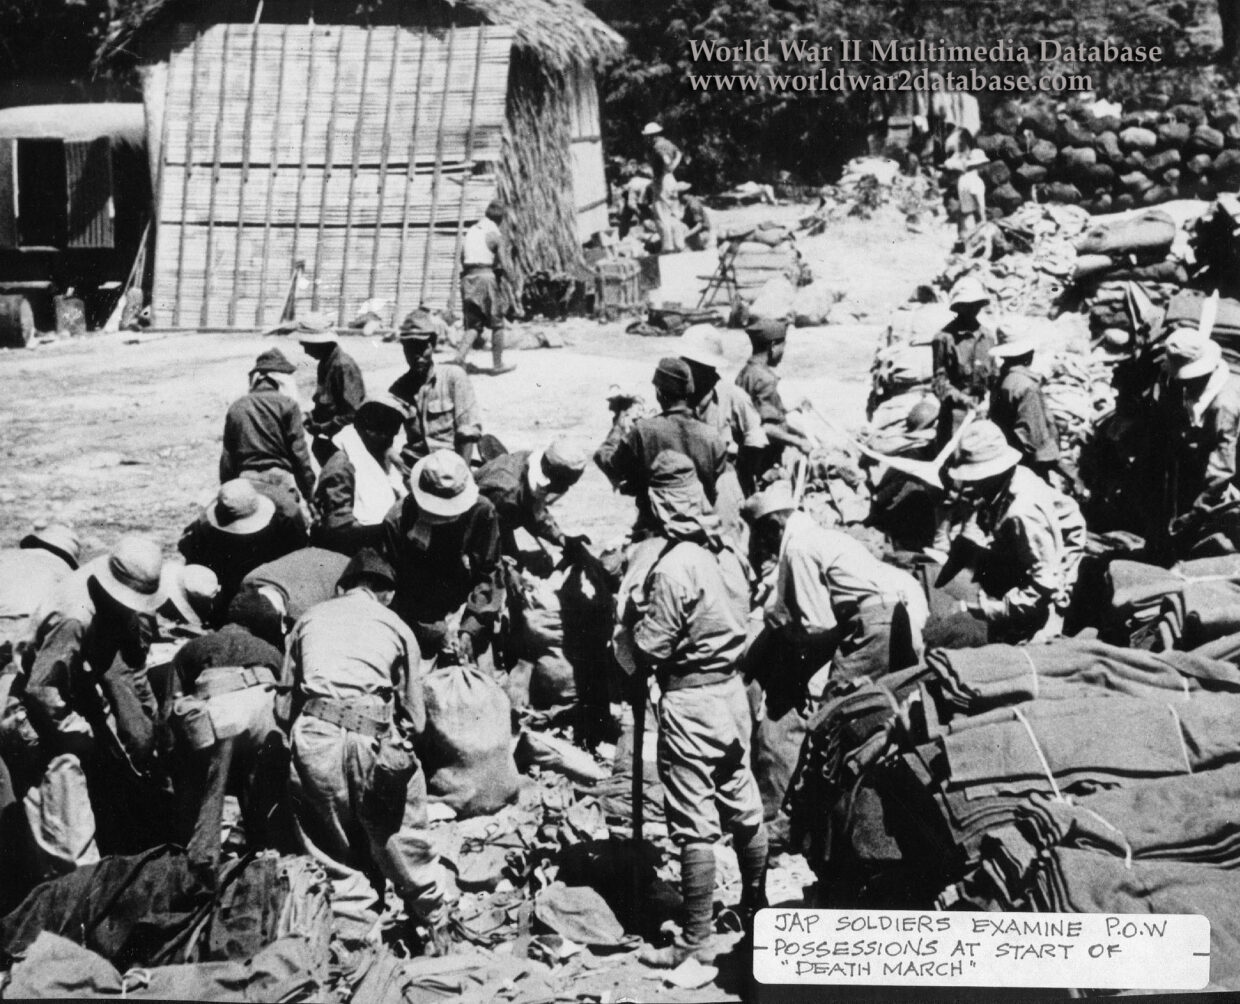 Allied Prisoners of War Sort Confiscated Equipment on Bataan